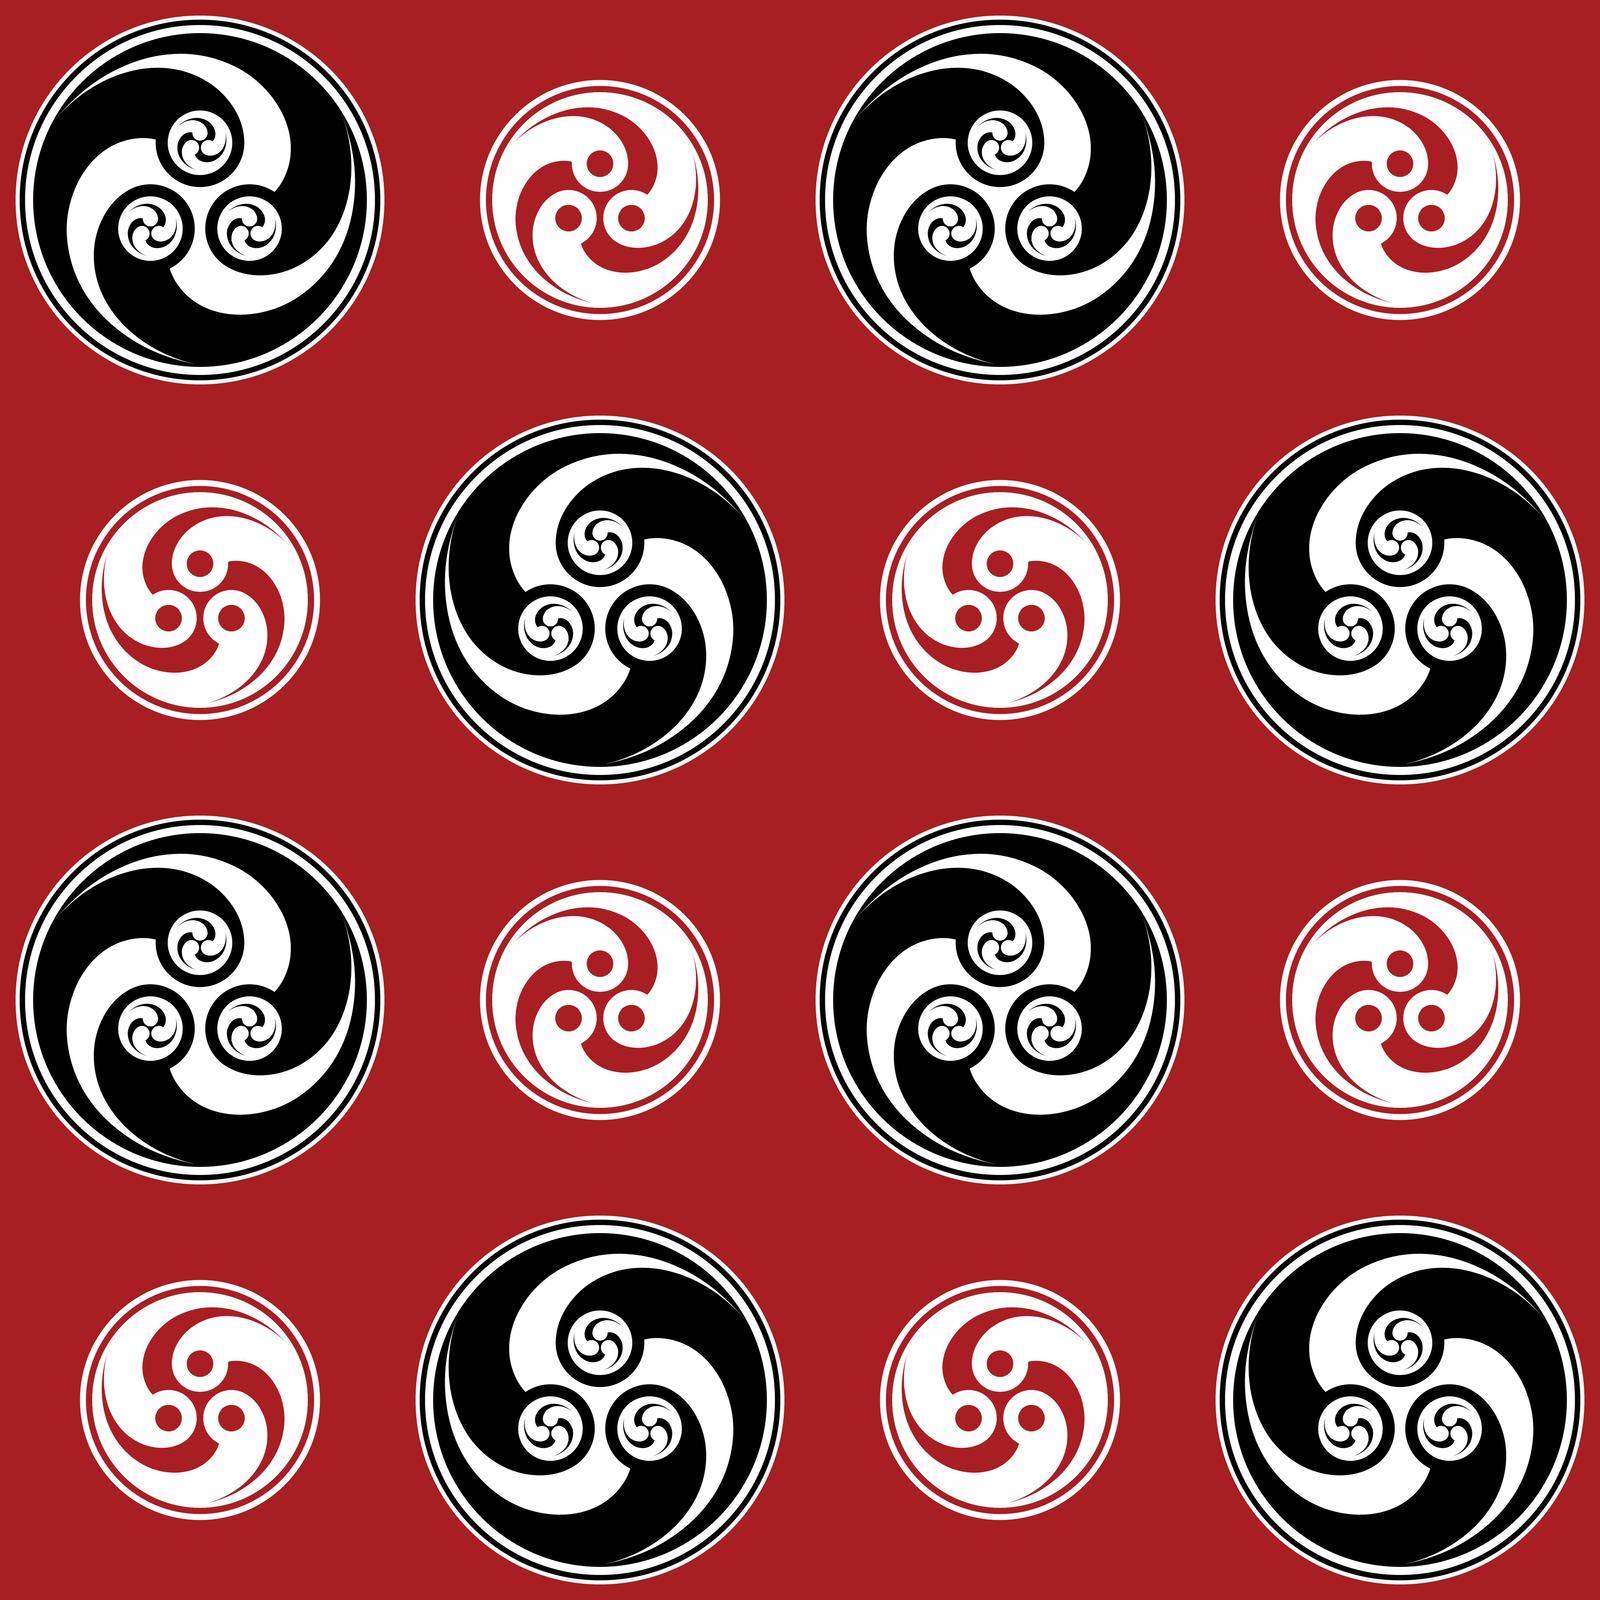 Tomoe hams pattern vector design, symbol of Japanese culture